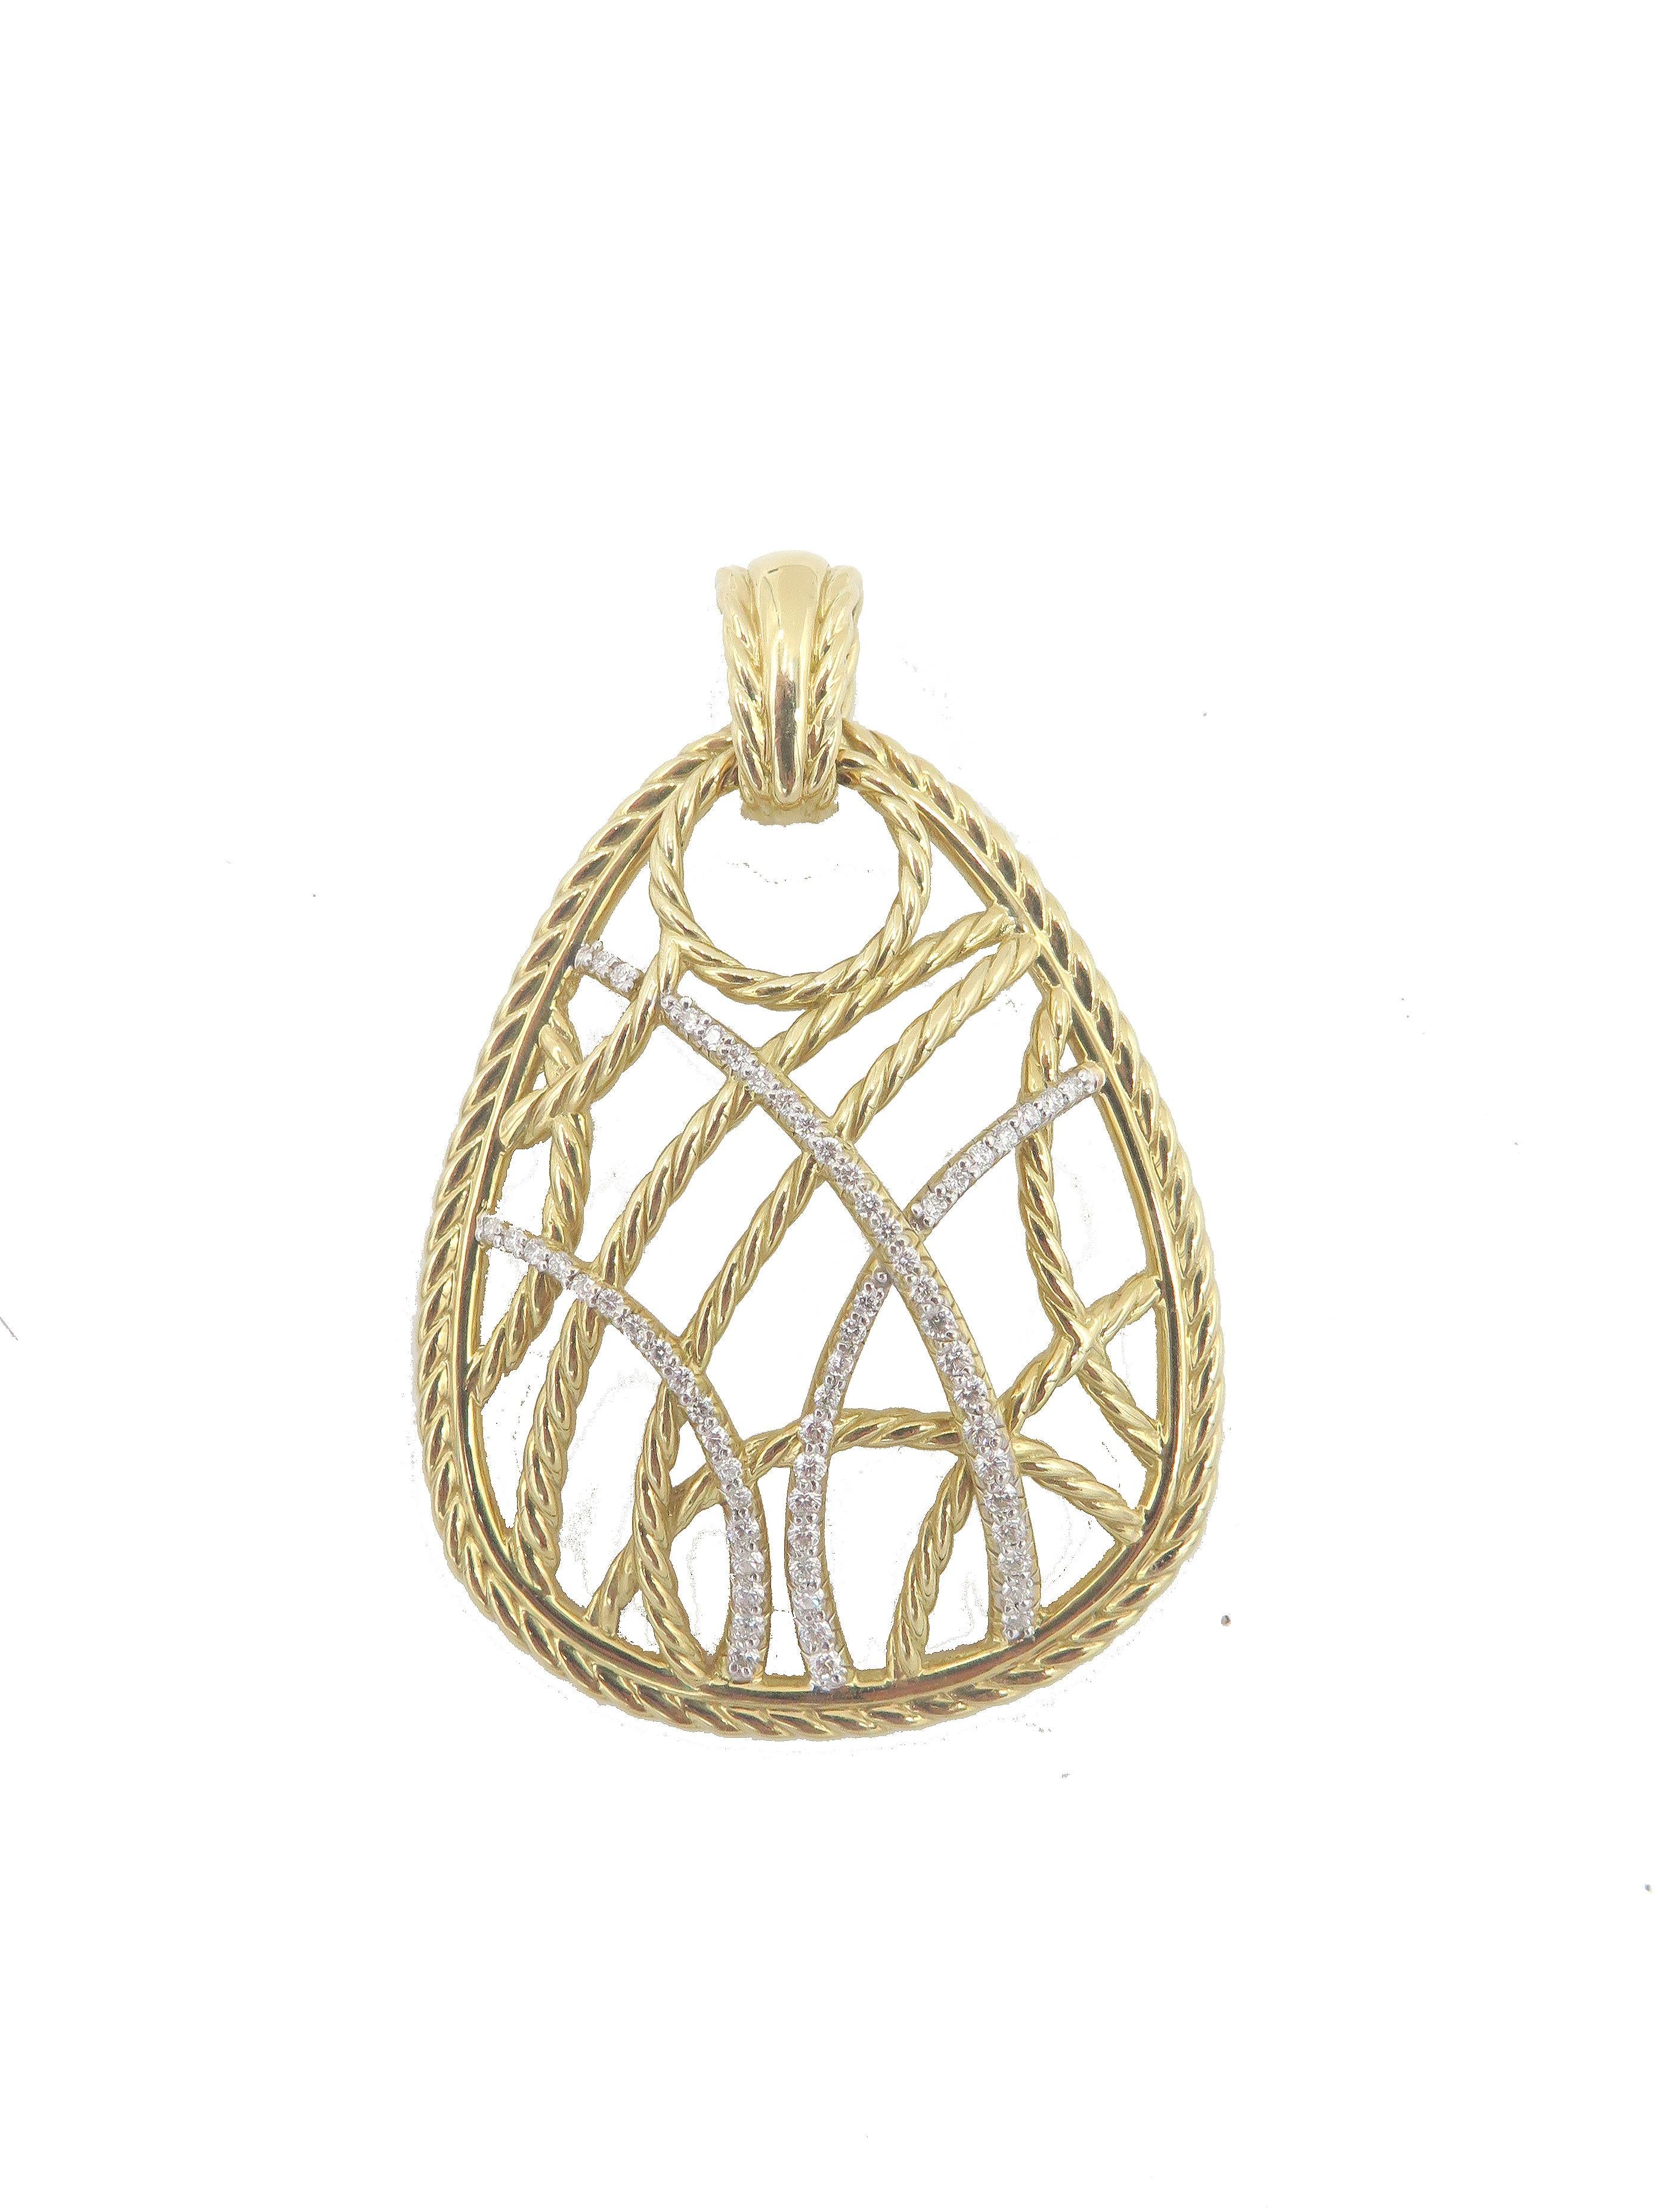 18k Yellow gold David Yurman Pendant. In a beautiful cable style design this David Yurman pendant is 2.1